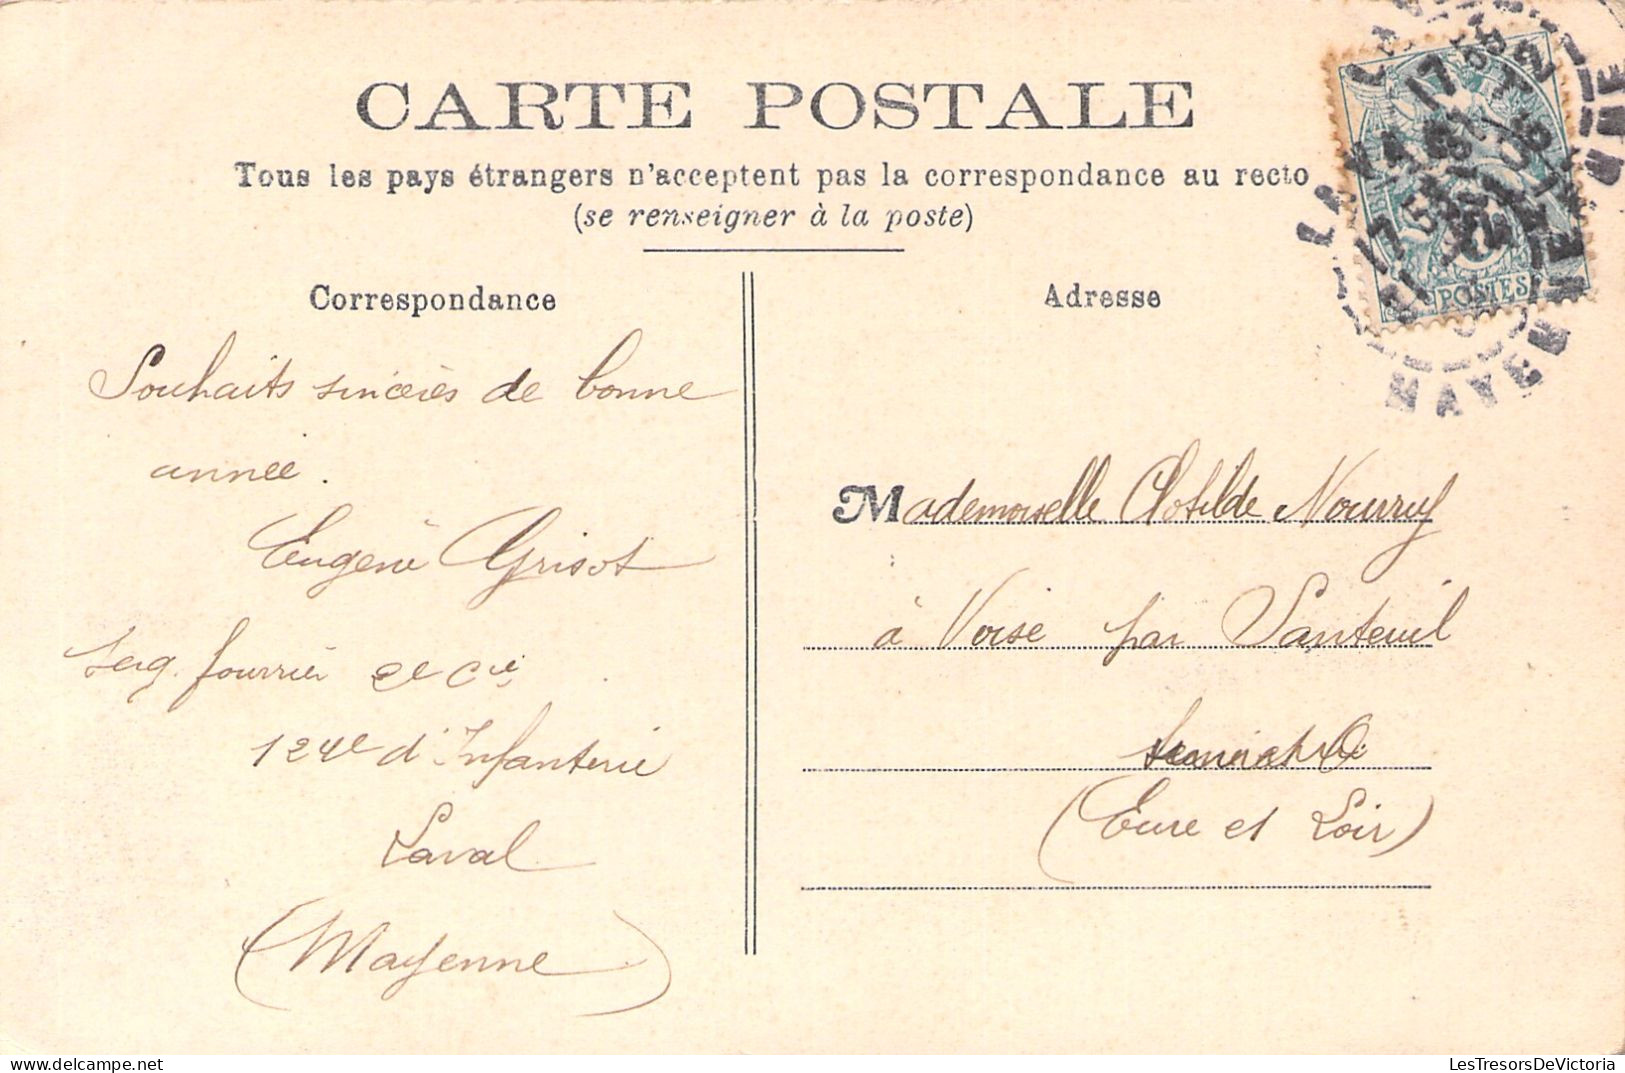 FRANCE - Entrammes - Notre Dame Du Triomphe - Carte Postale Ancienne - Entrammes